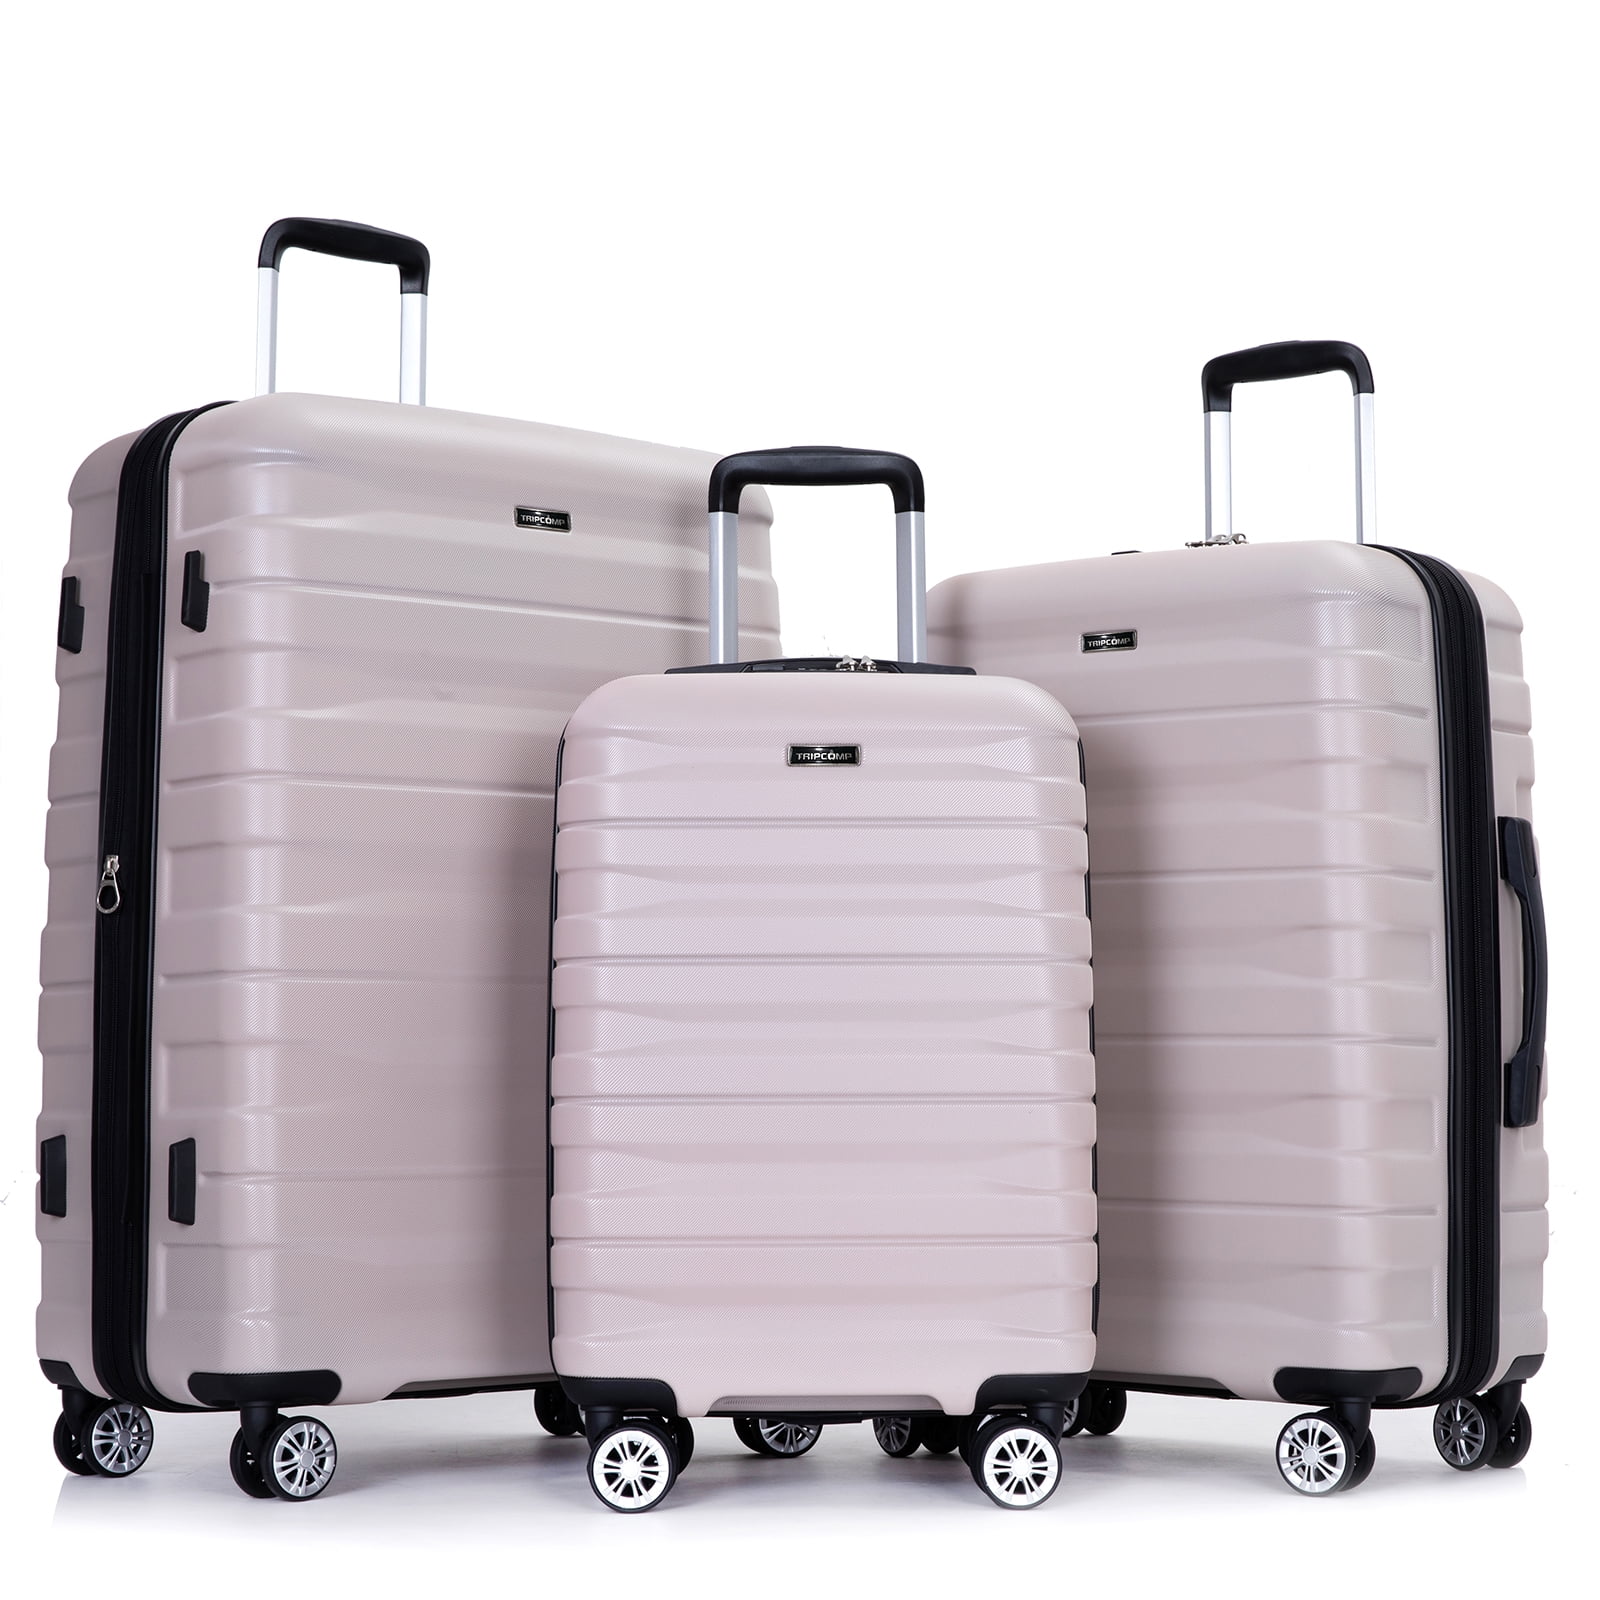 Tripcomp Hardside Luggage Set,Carry-on,Lightweight Suitcase Set of ...